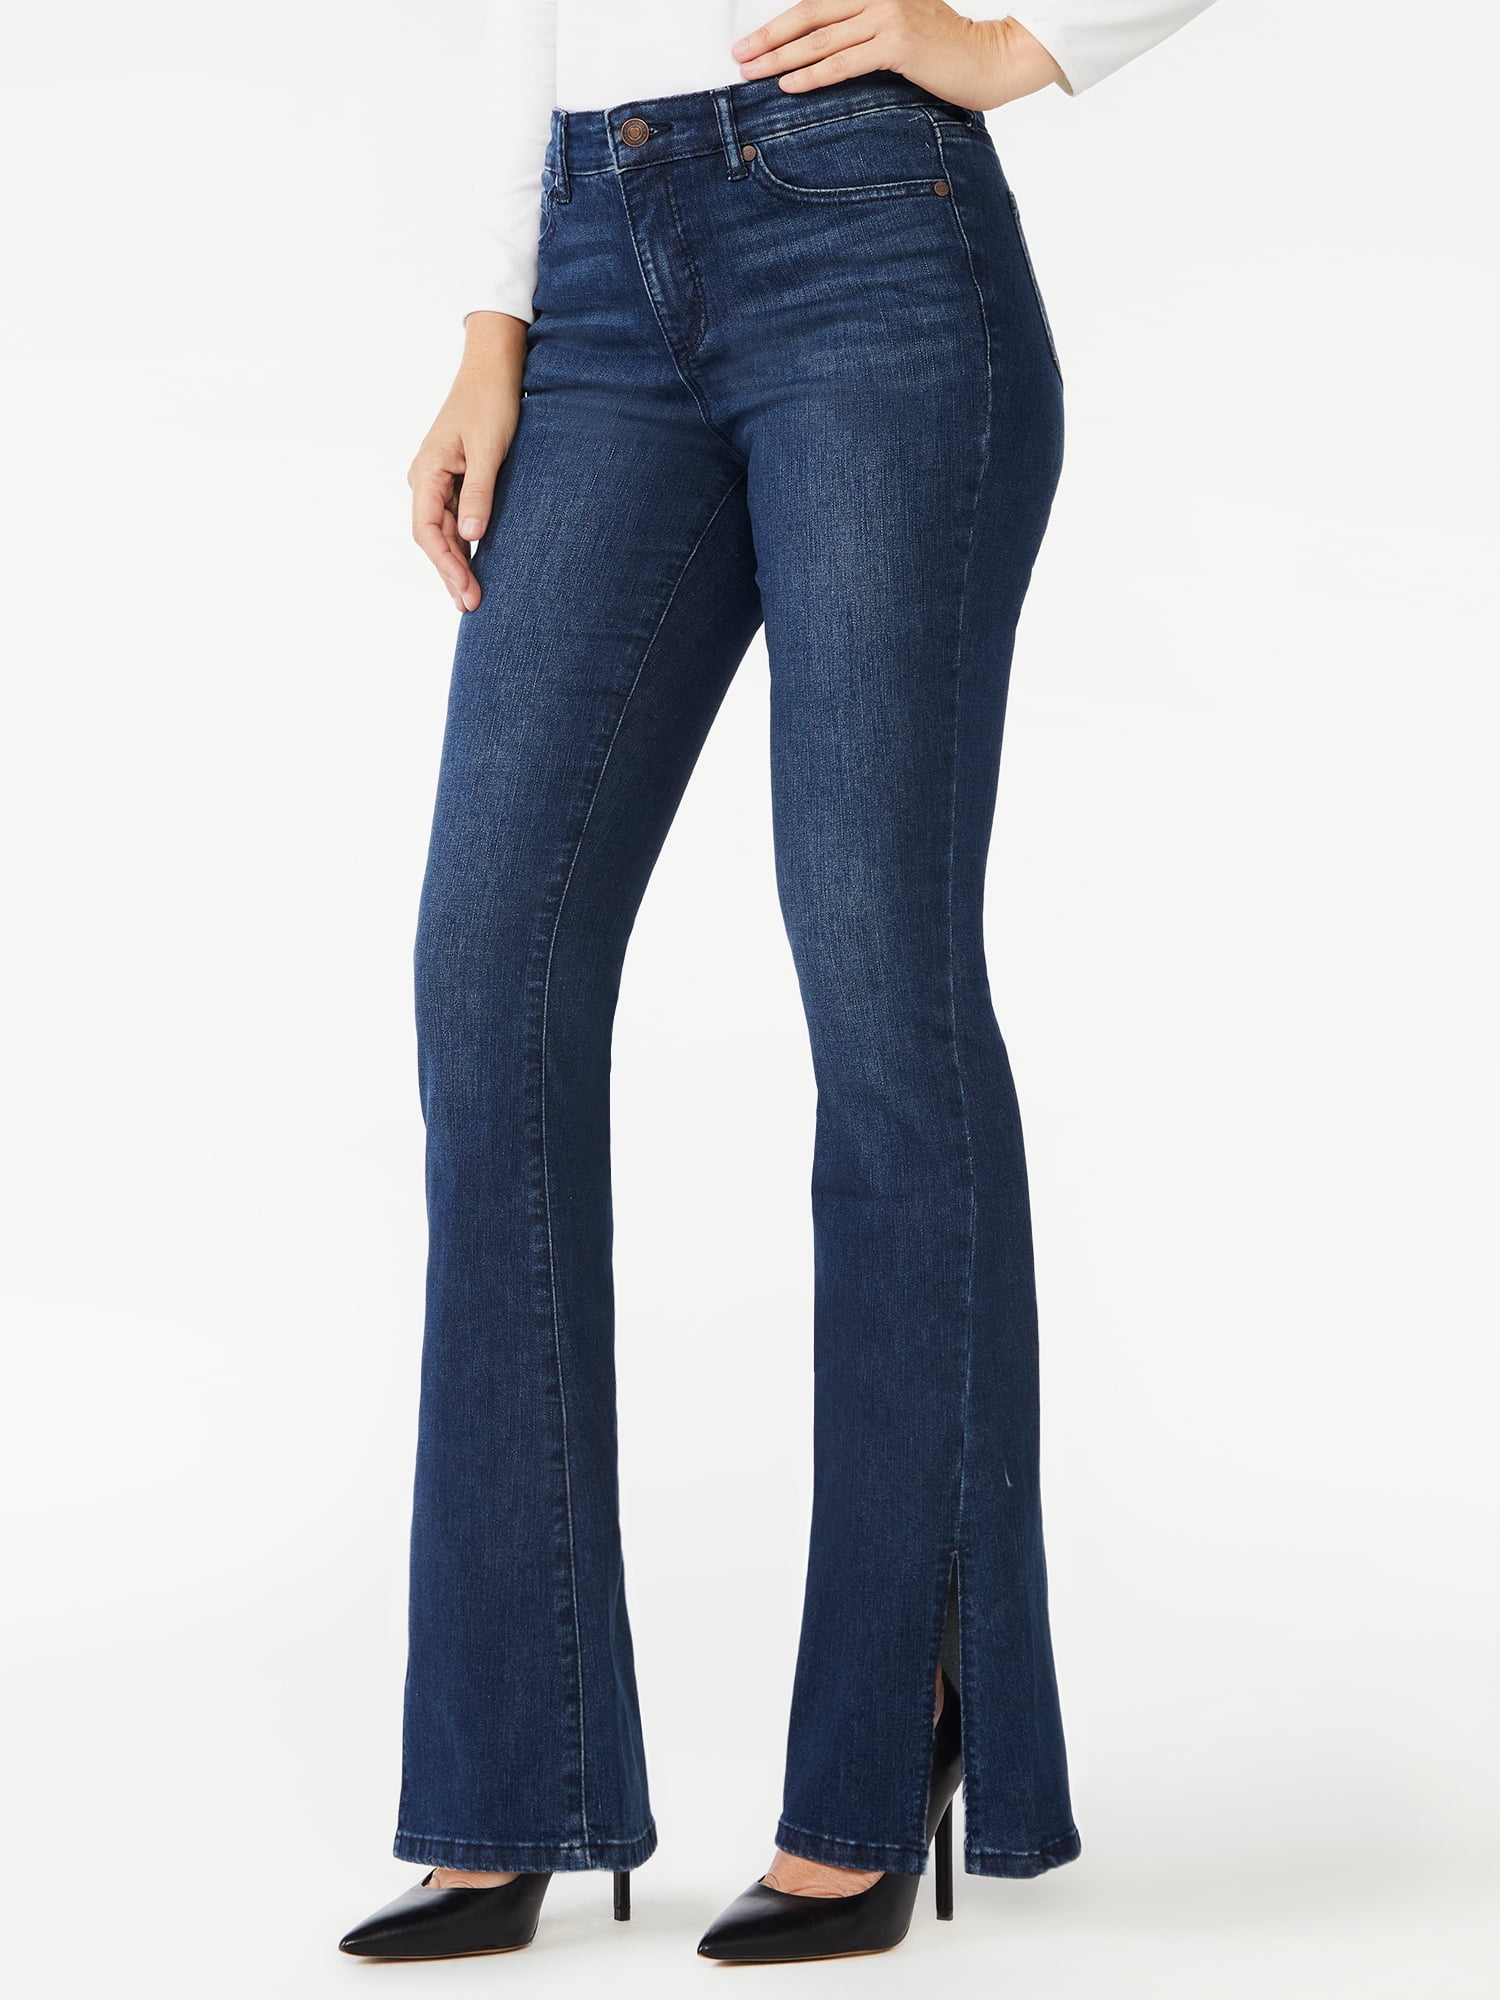 Sofia Jeans Women's Melisa Flare High Rise Split Hem Jeans - Walmart.com